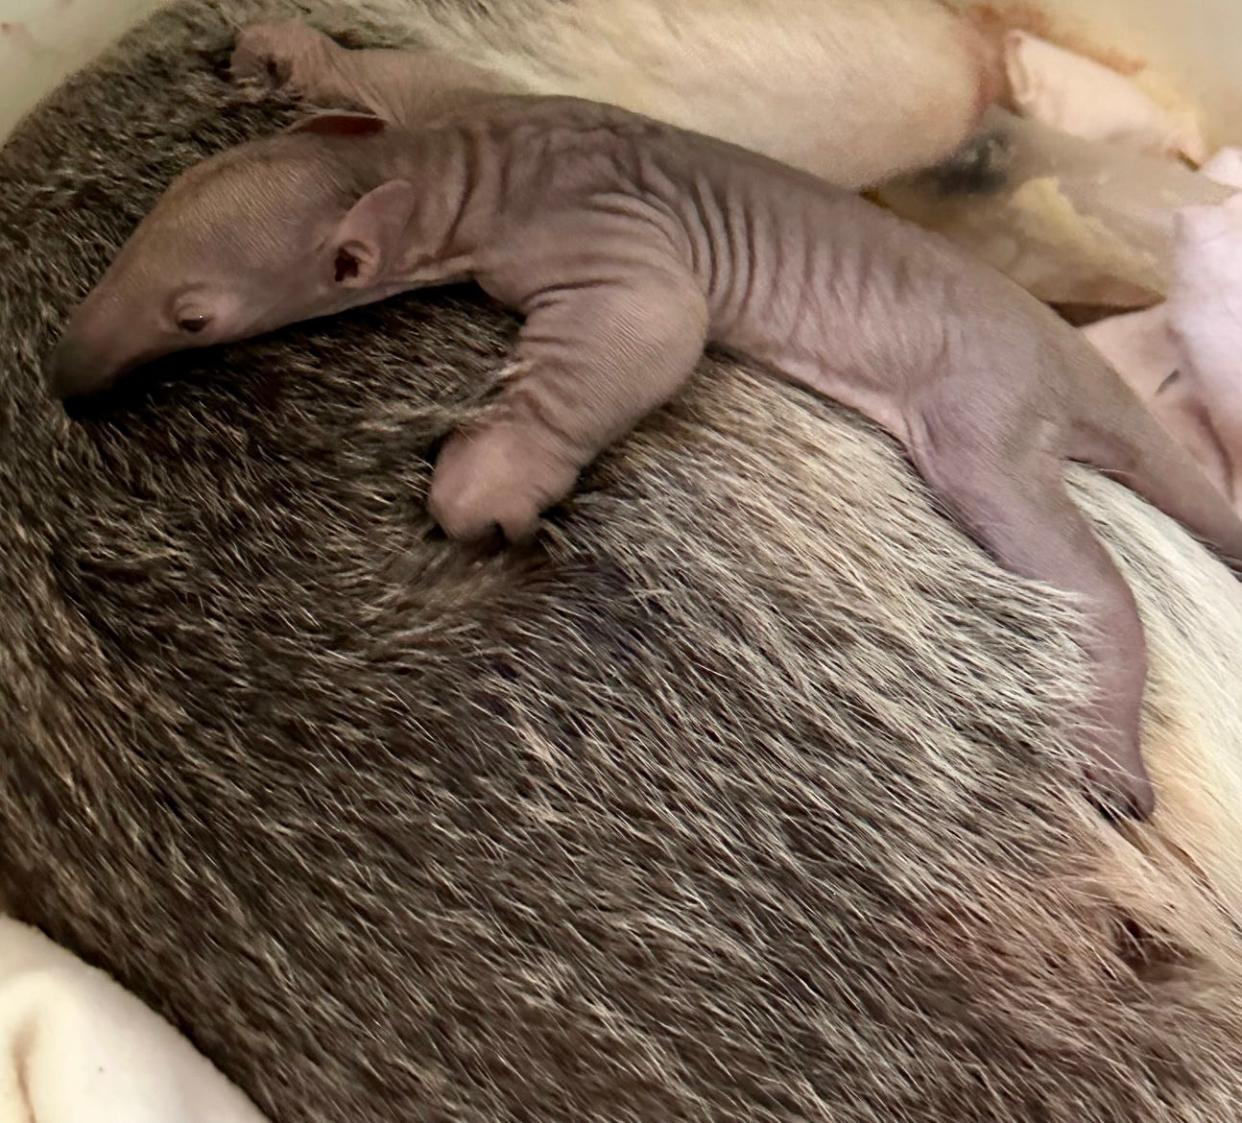 The Cincinnati Zoo welcomed the arrival of a baby tamandua Thursday morning.